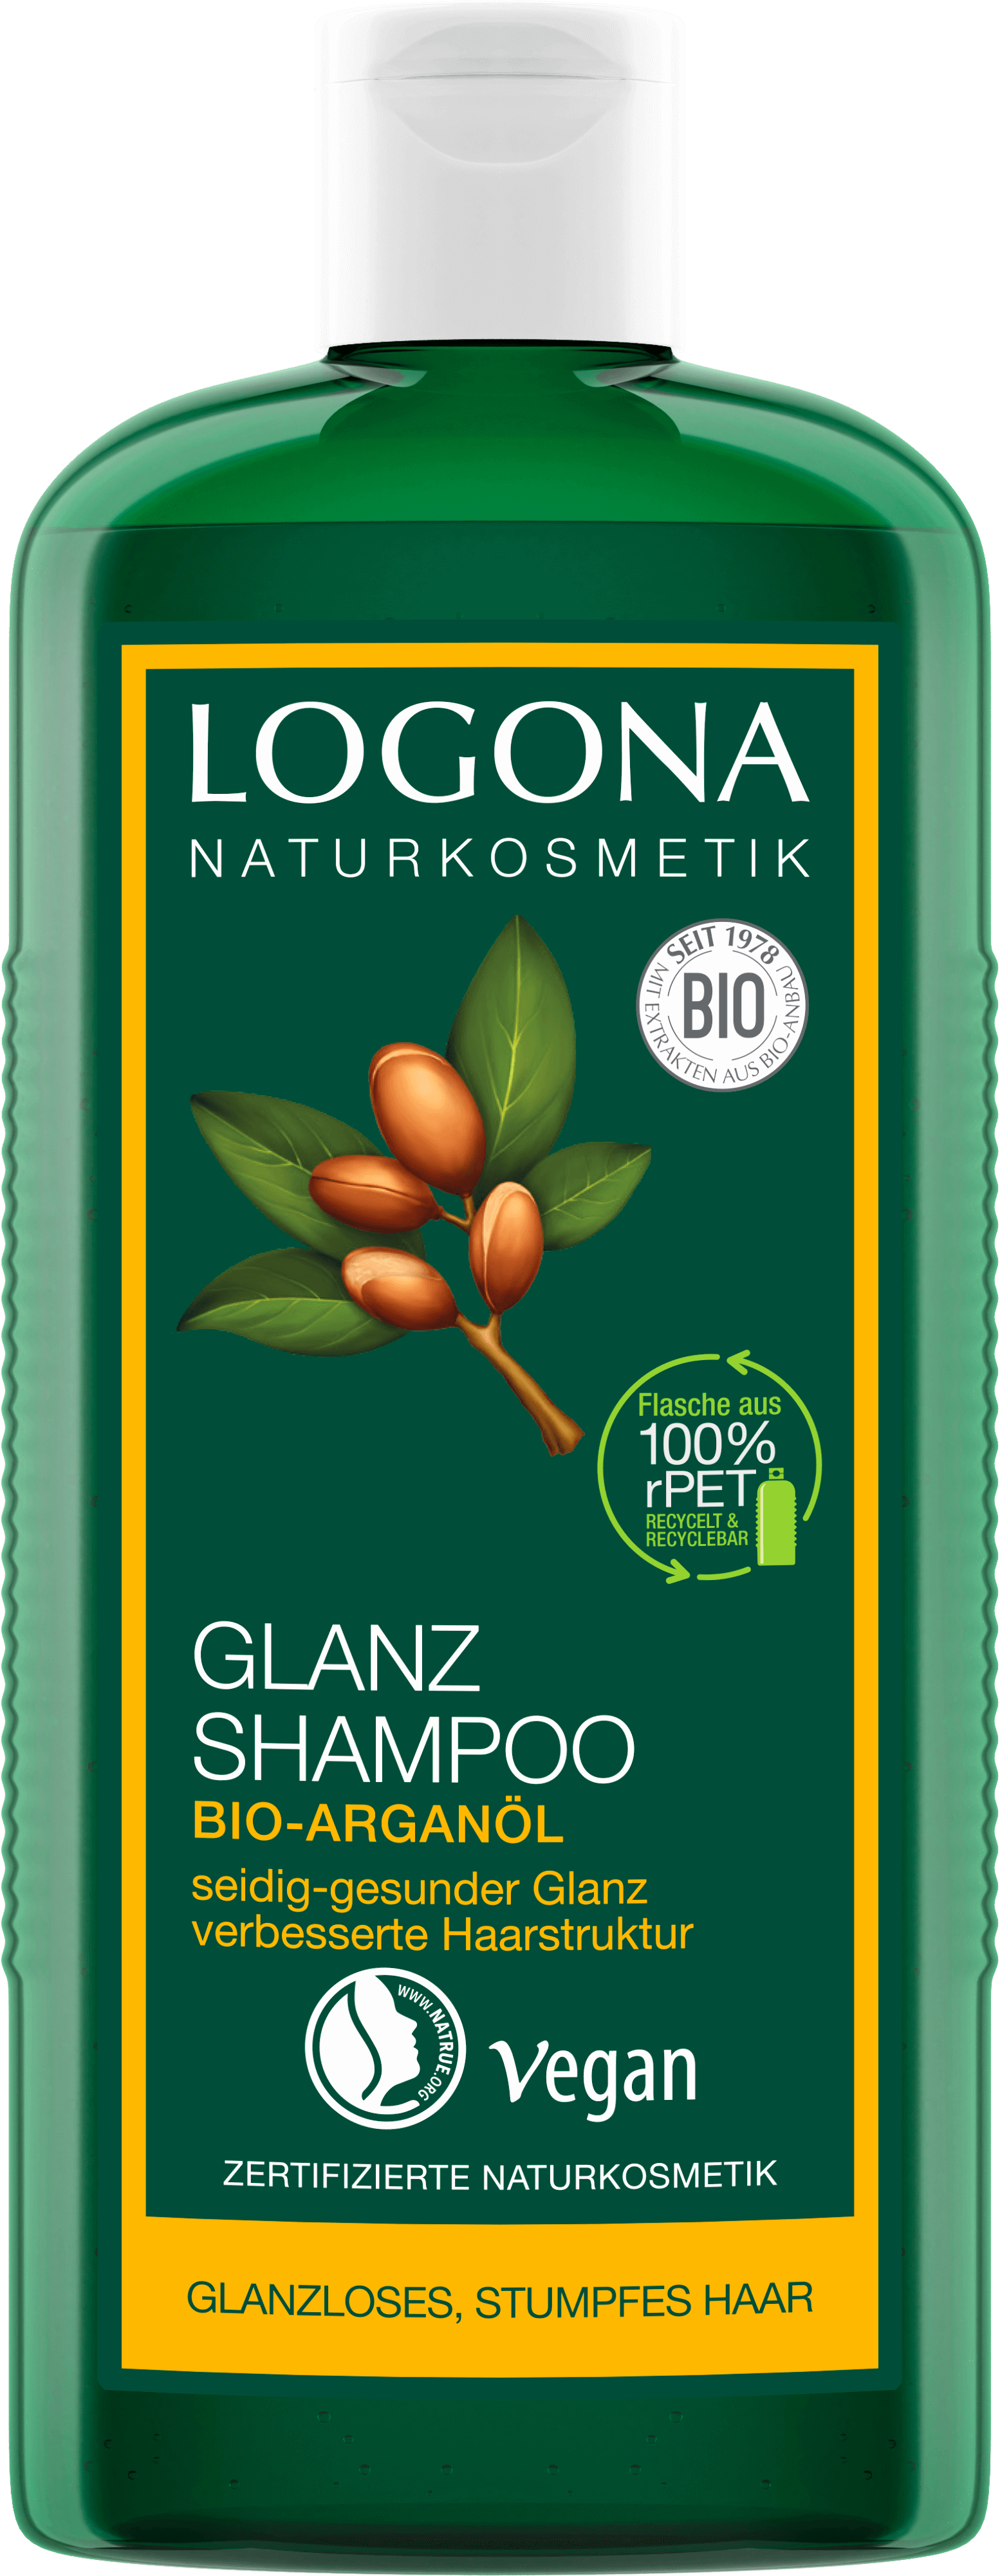 Glanz Shampoo Bio Arganol Logona Naturkosmetik